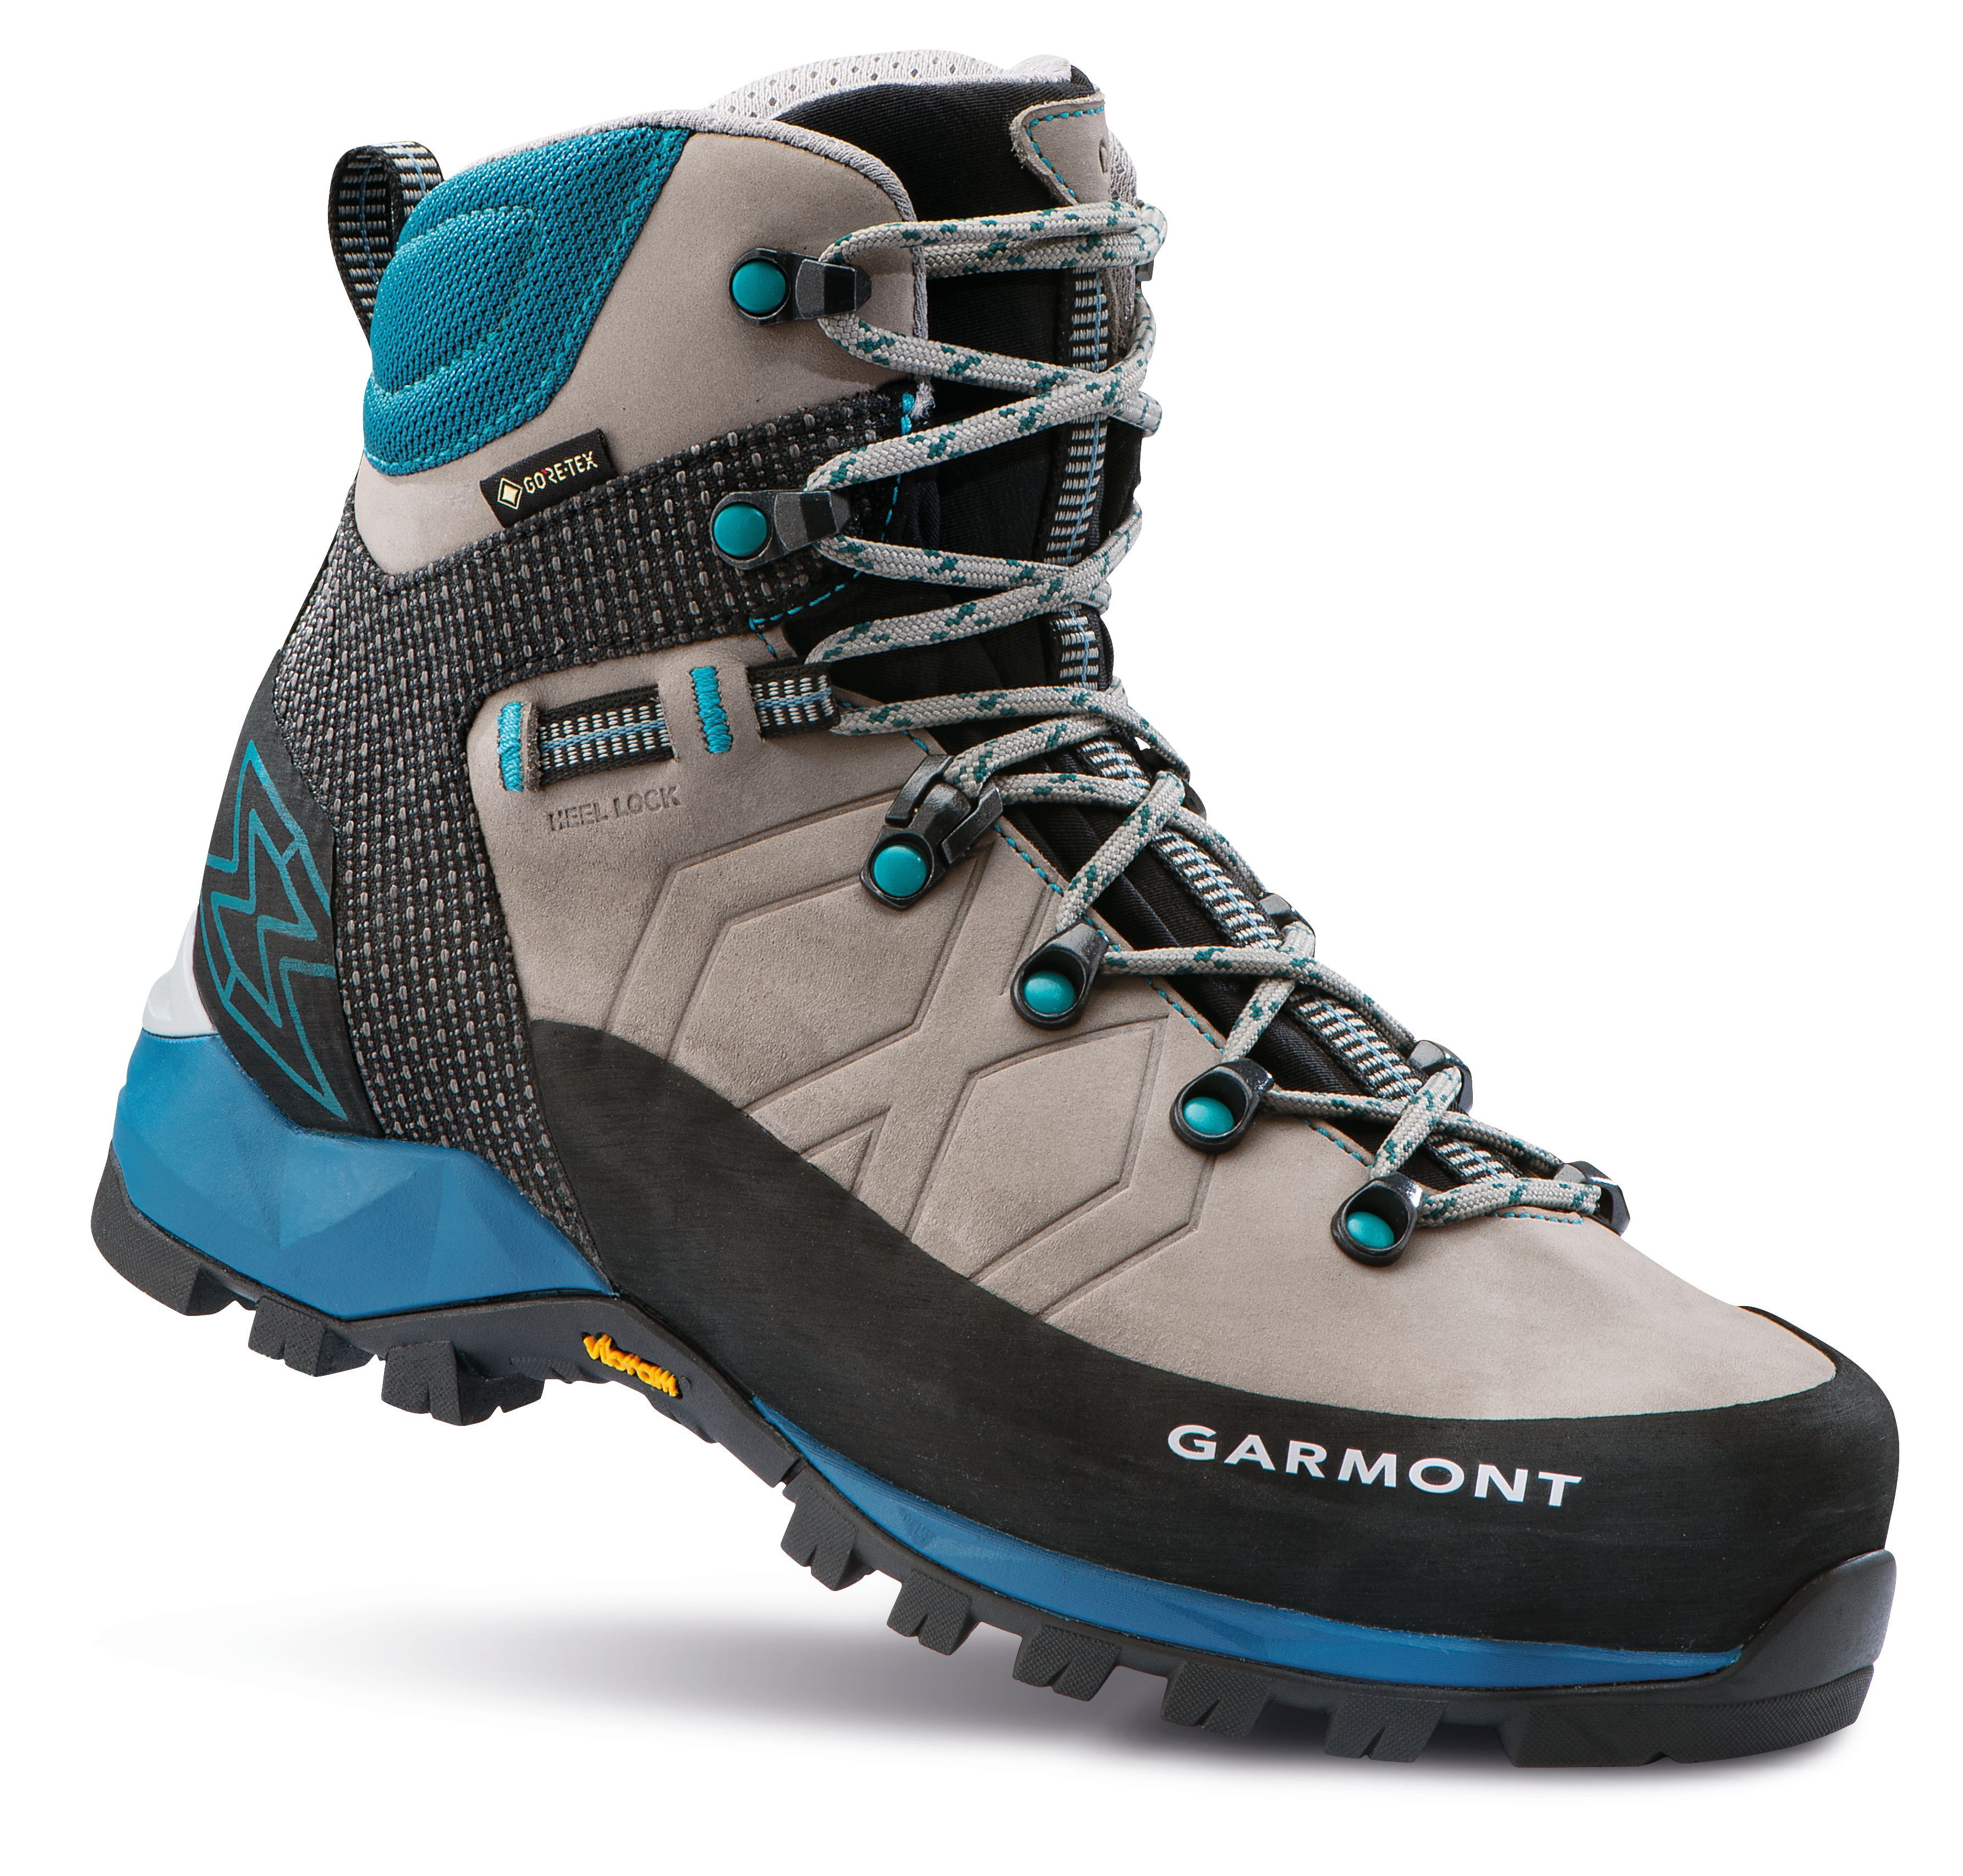 Garmont Toubkal 2.1 GTX - Hiking boots - Women's